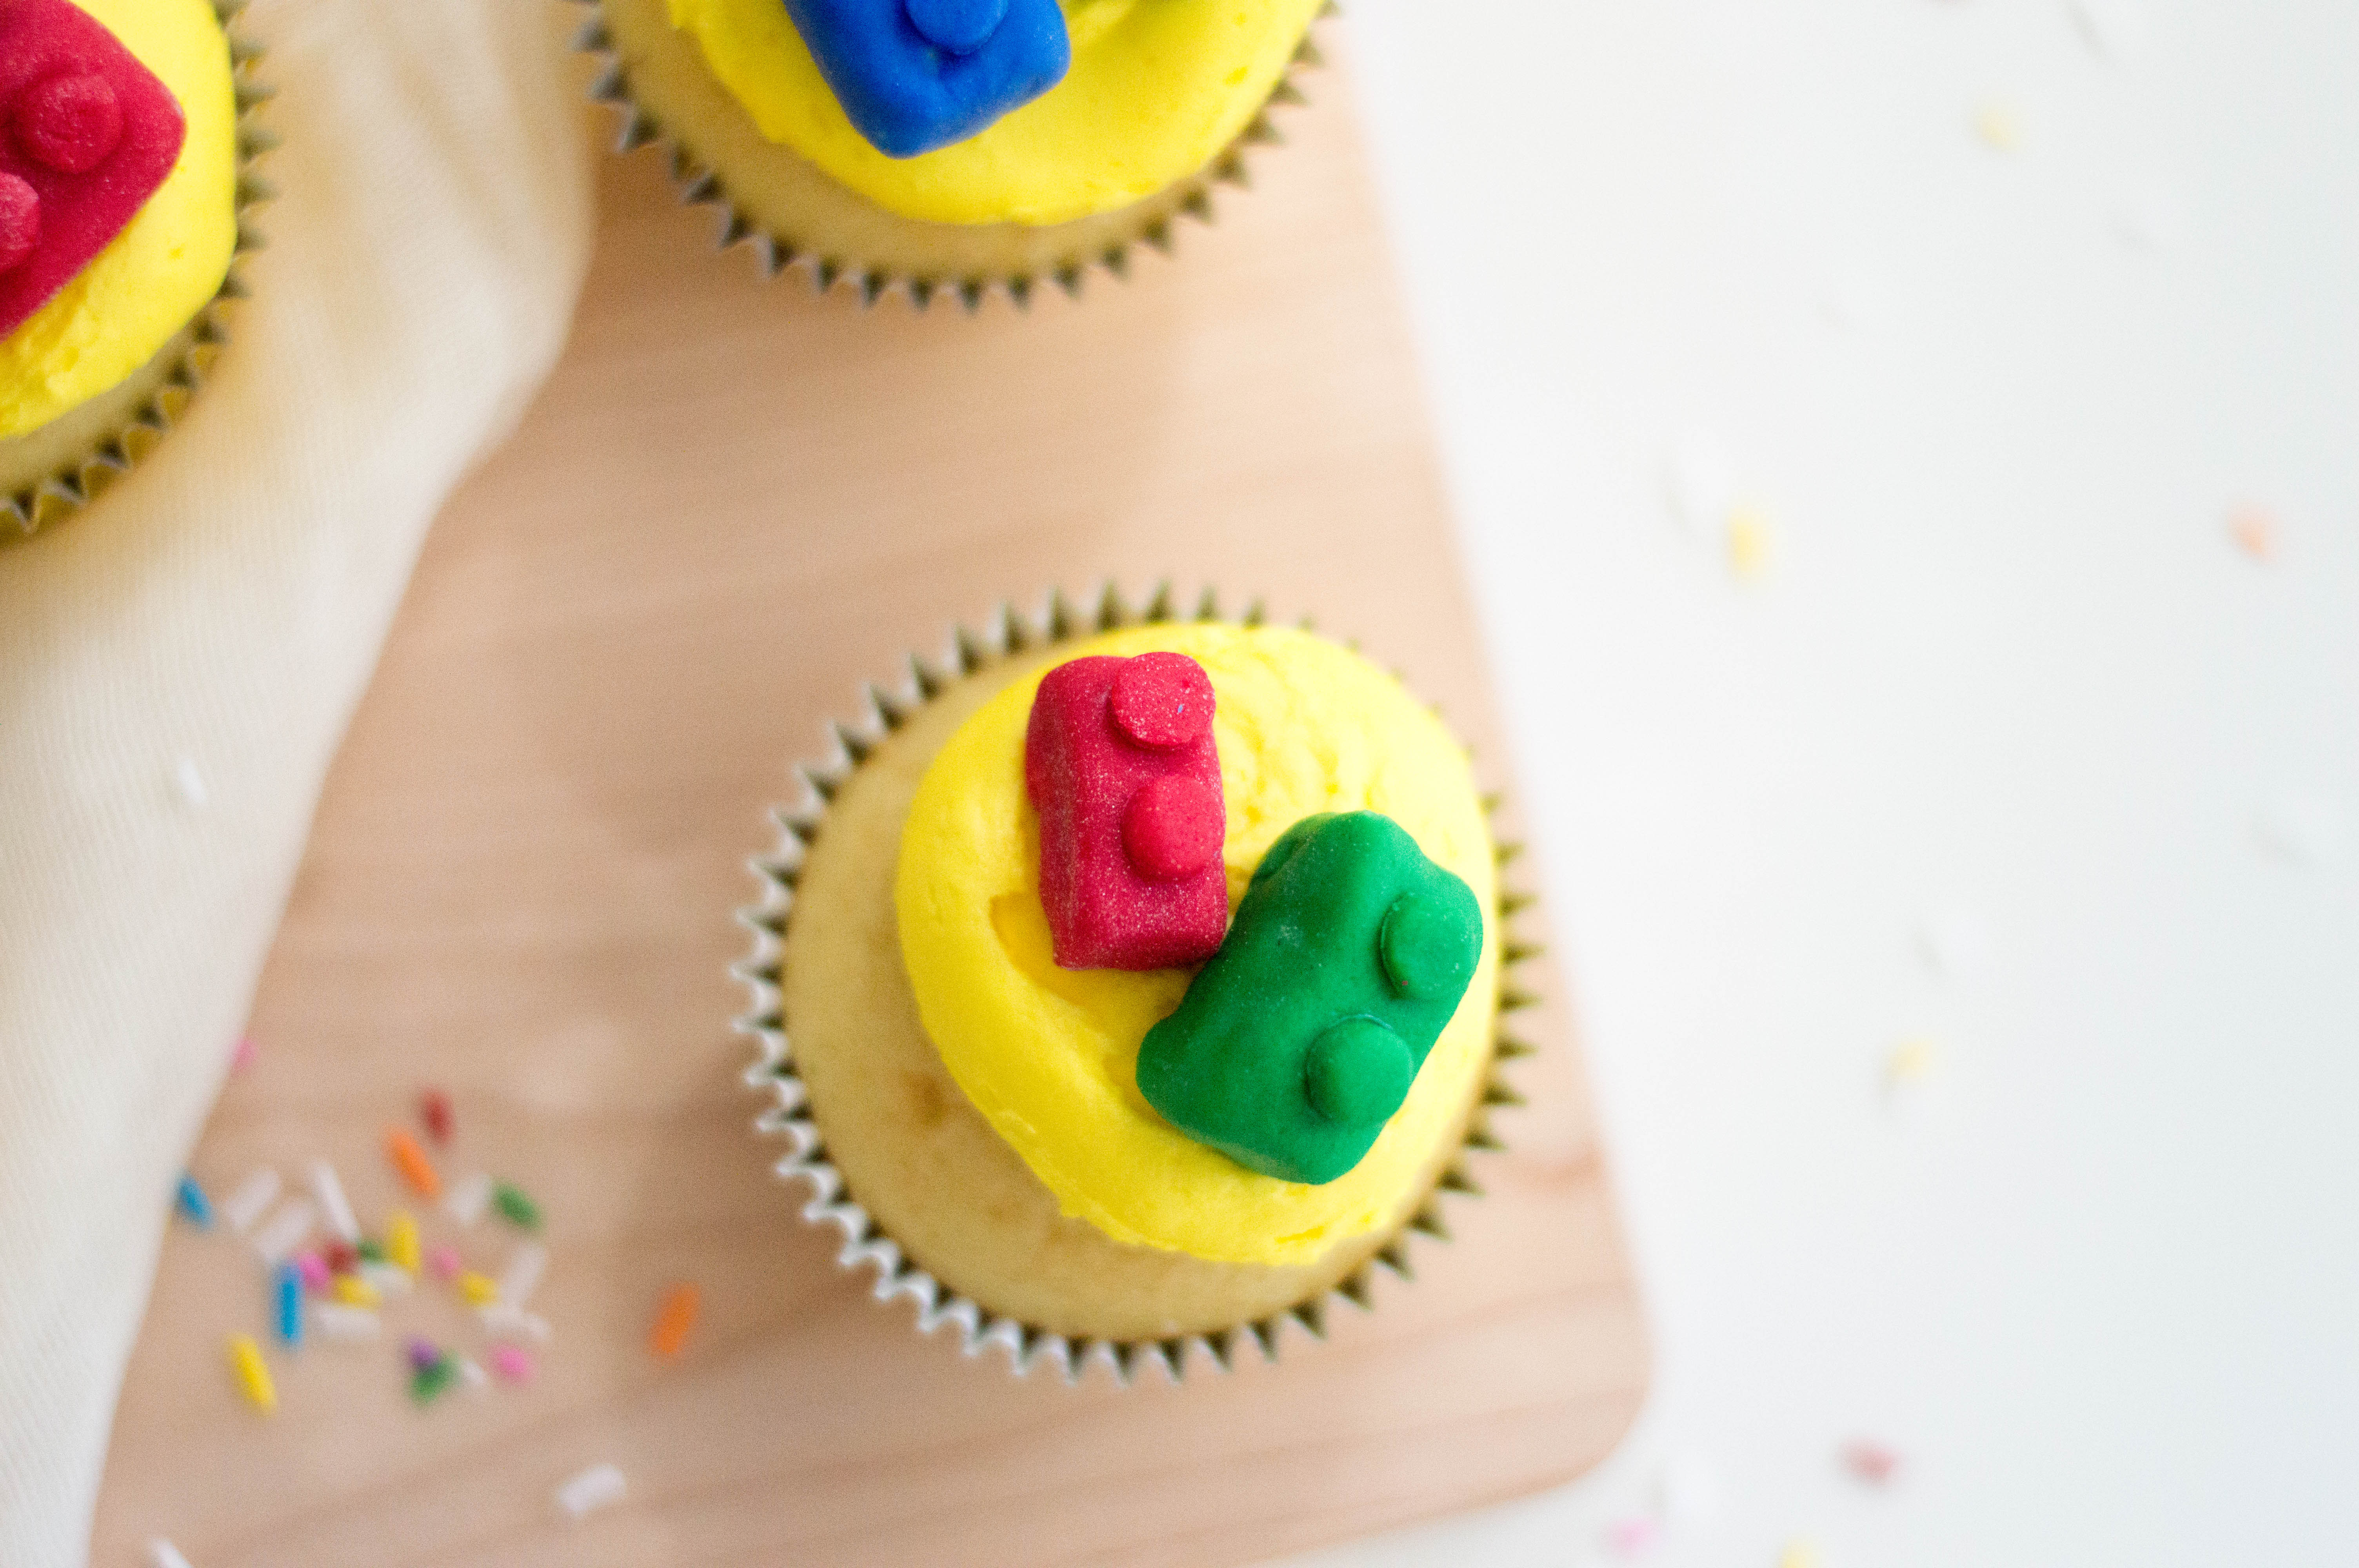 LEGO Themed Birthday Cupcakes Recipe with Candy LEGO Bricks